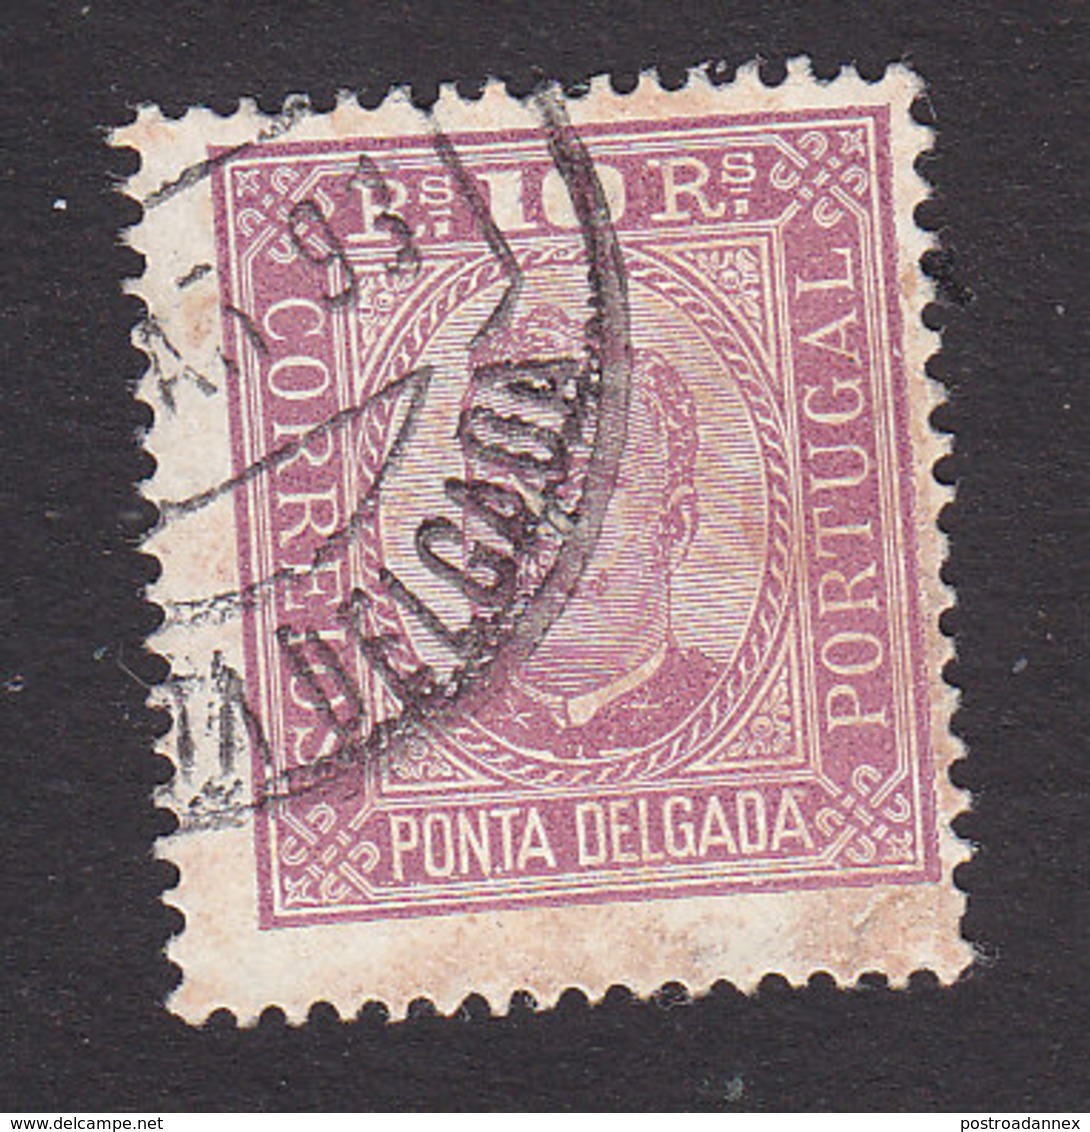 Ponta Delgada, Scott #2, Used, King Carlos, Issued 1892 - Ponta Delgada